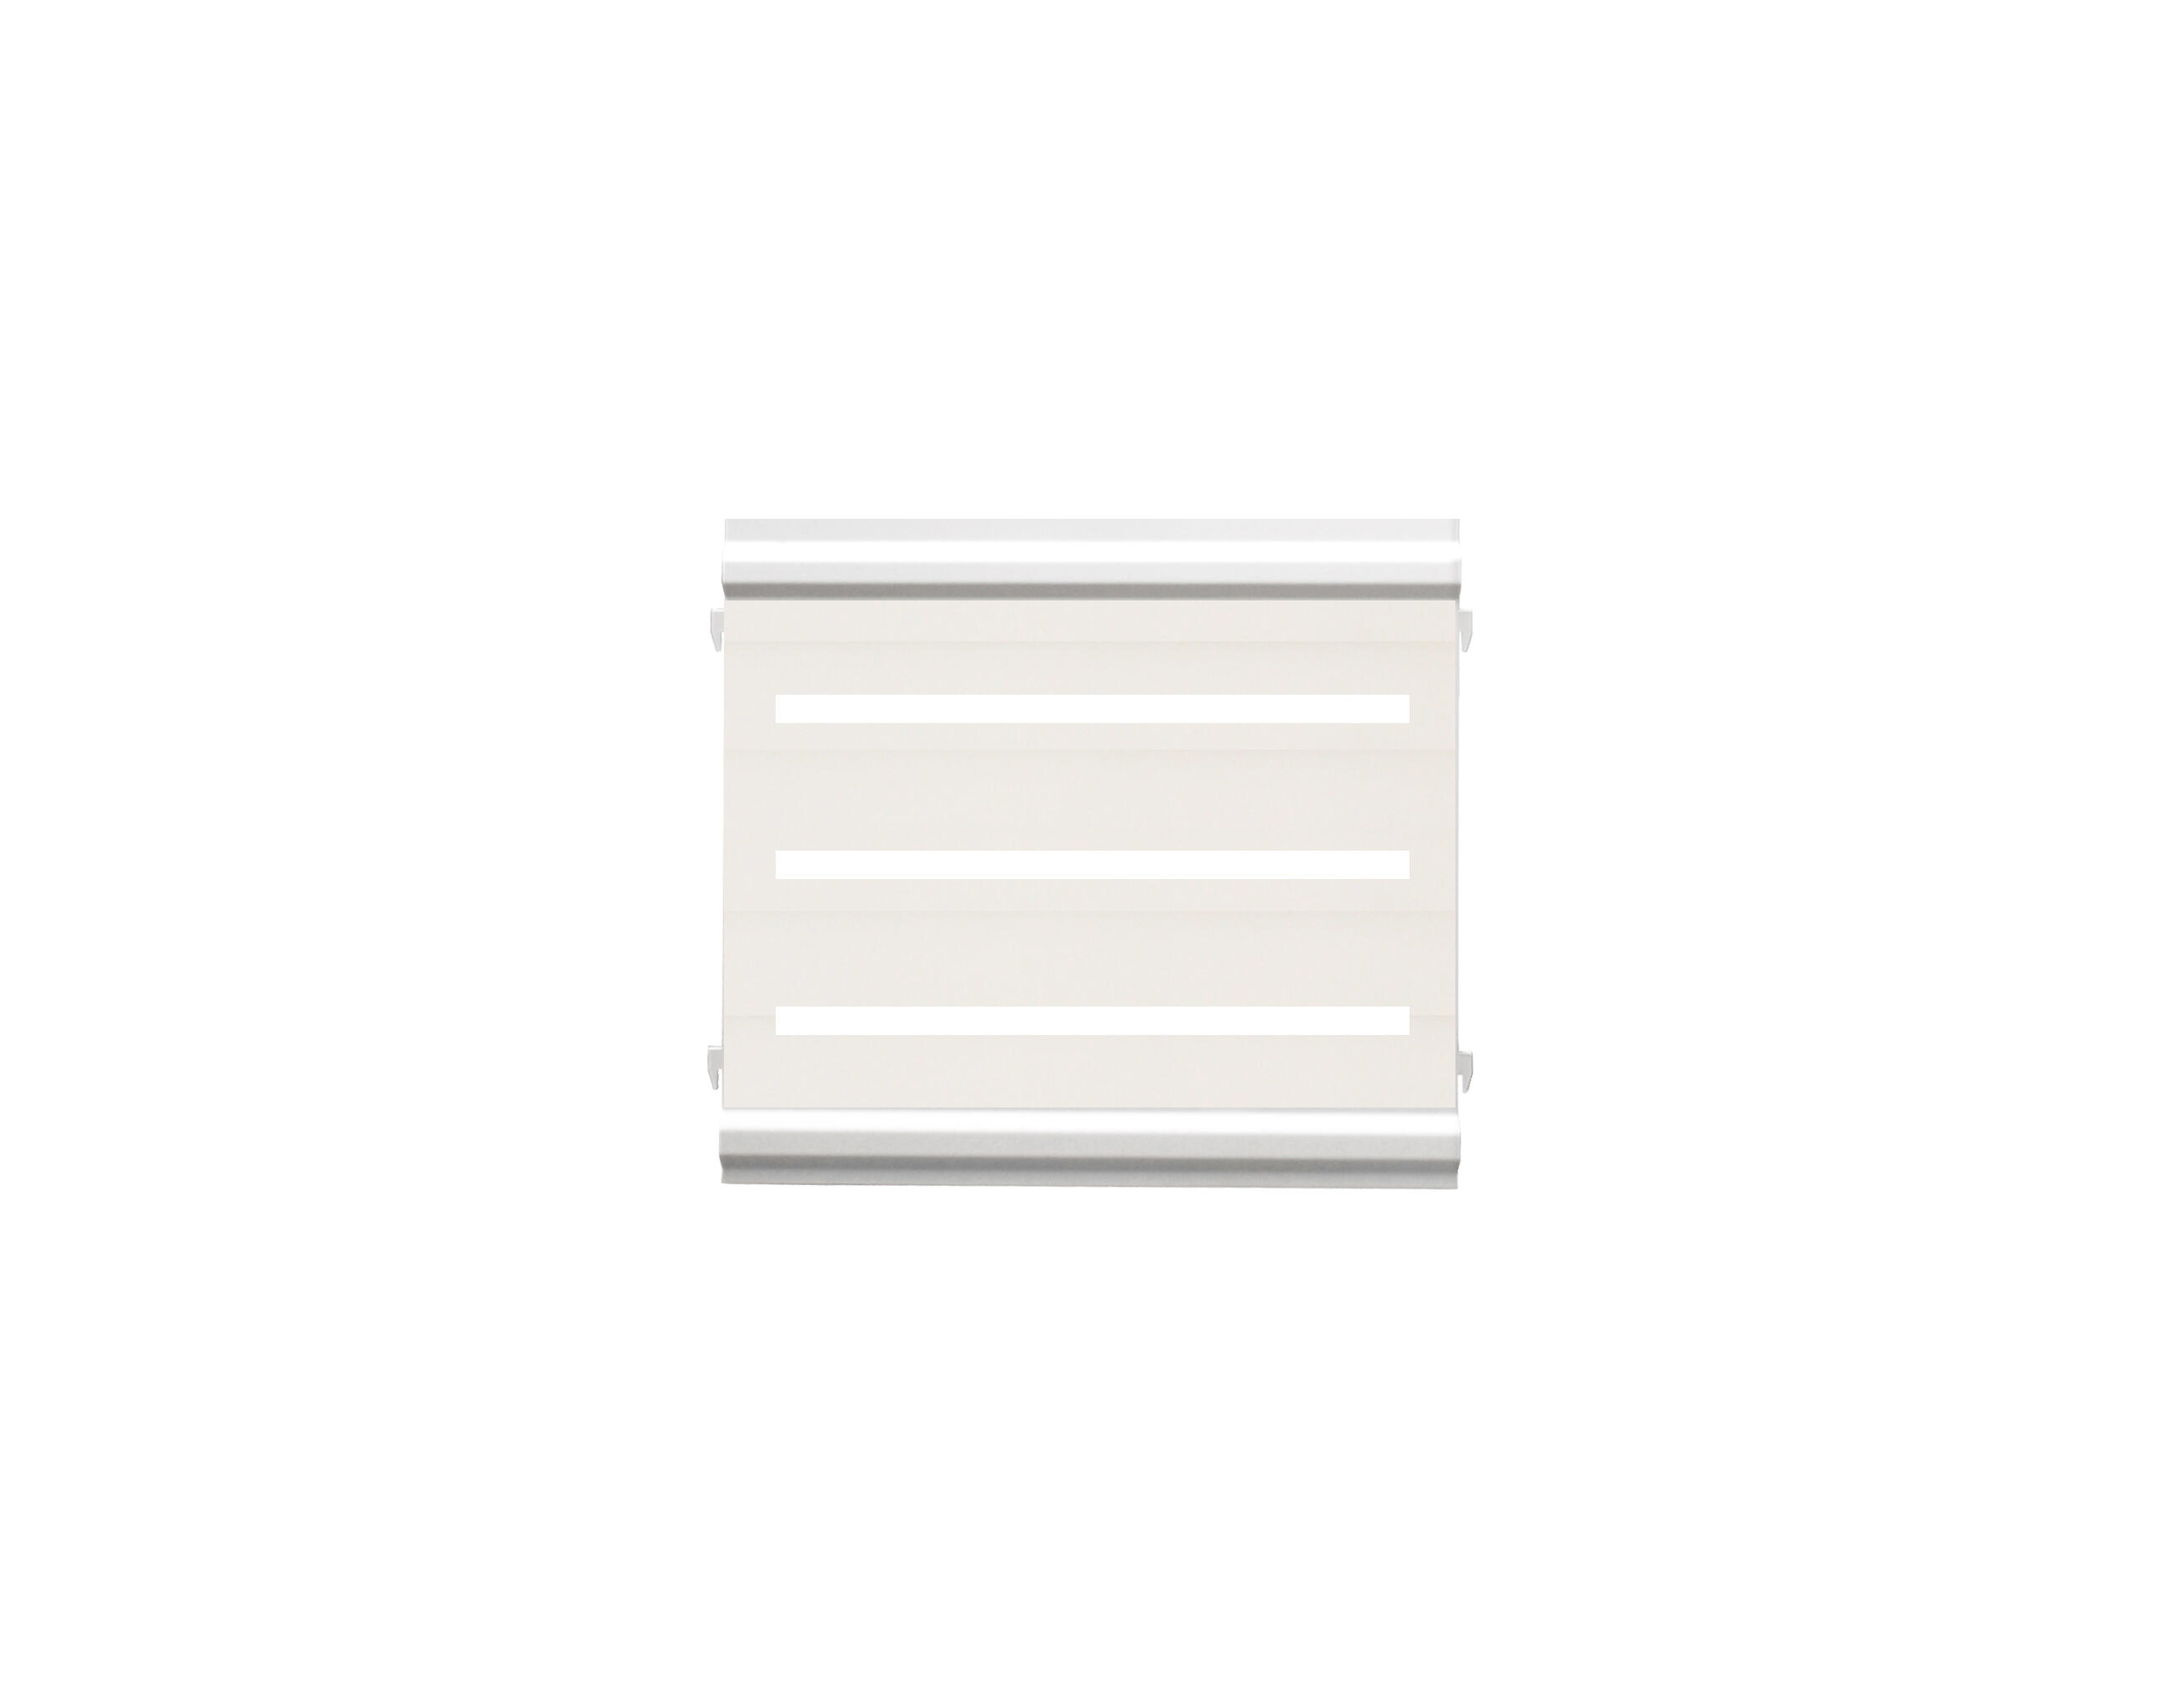 Panel remate valla acero galvanizado franja rayas blanco 44x52,5 cm